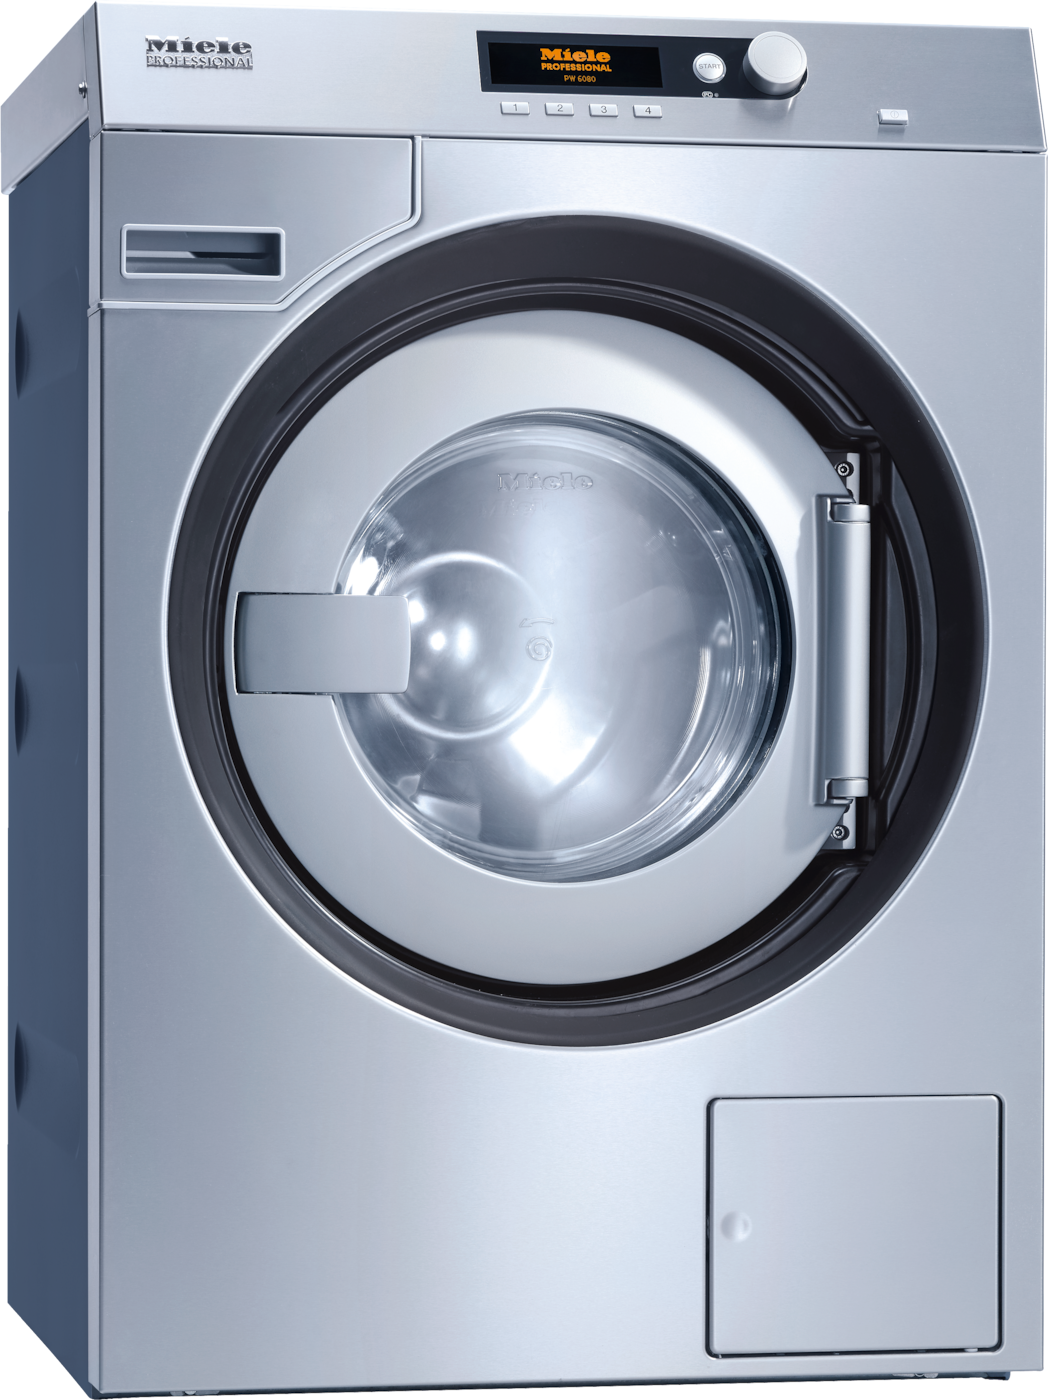 PW 6080 Vario [EL LP MAR] - Washing machine, electrically heated 